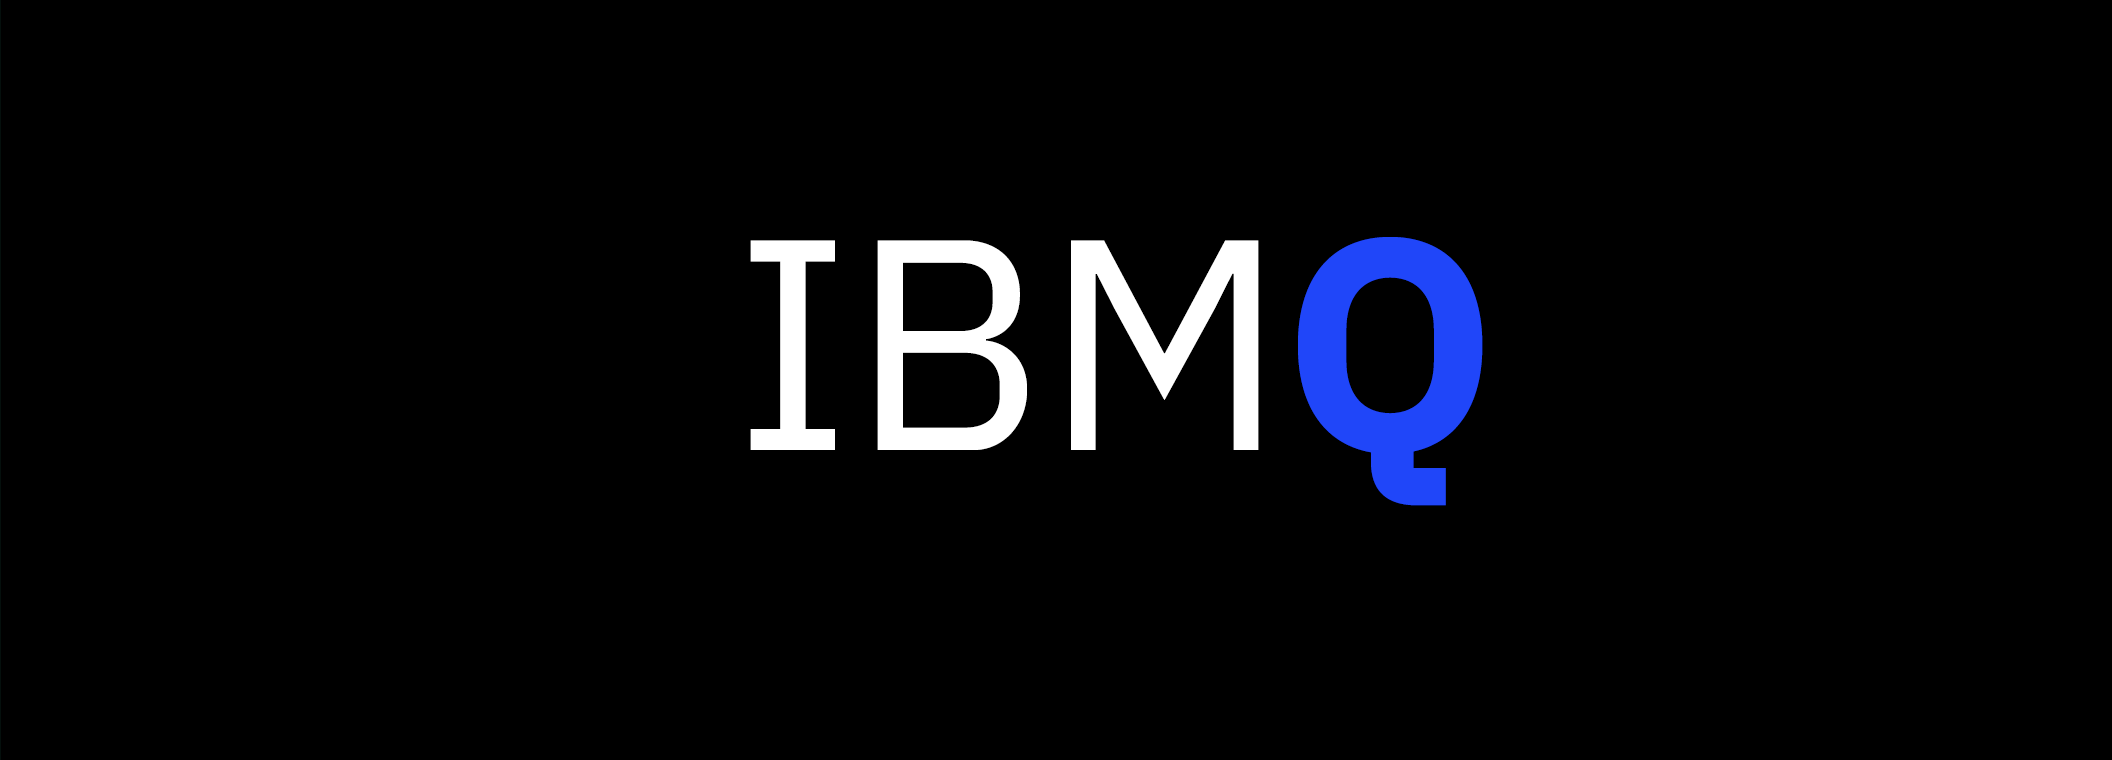 IBM - الولايات المتحدة